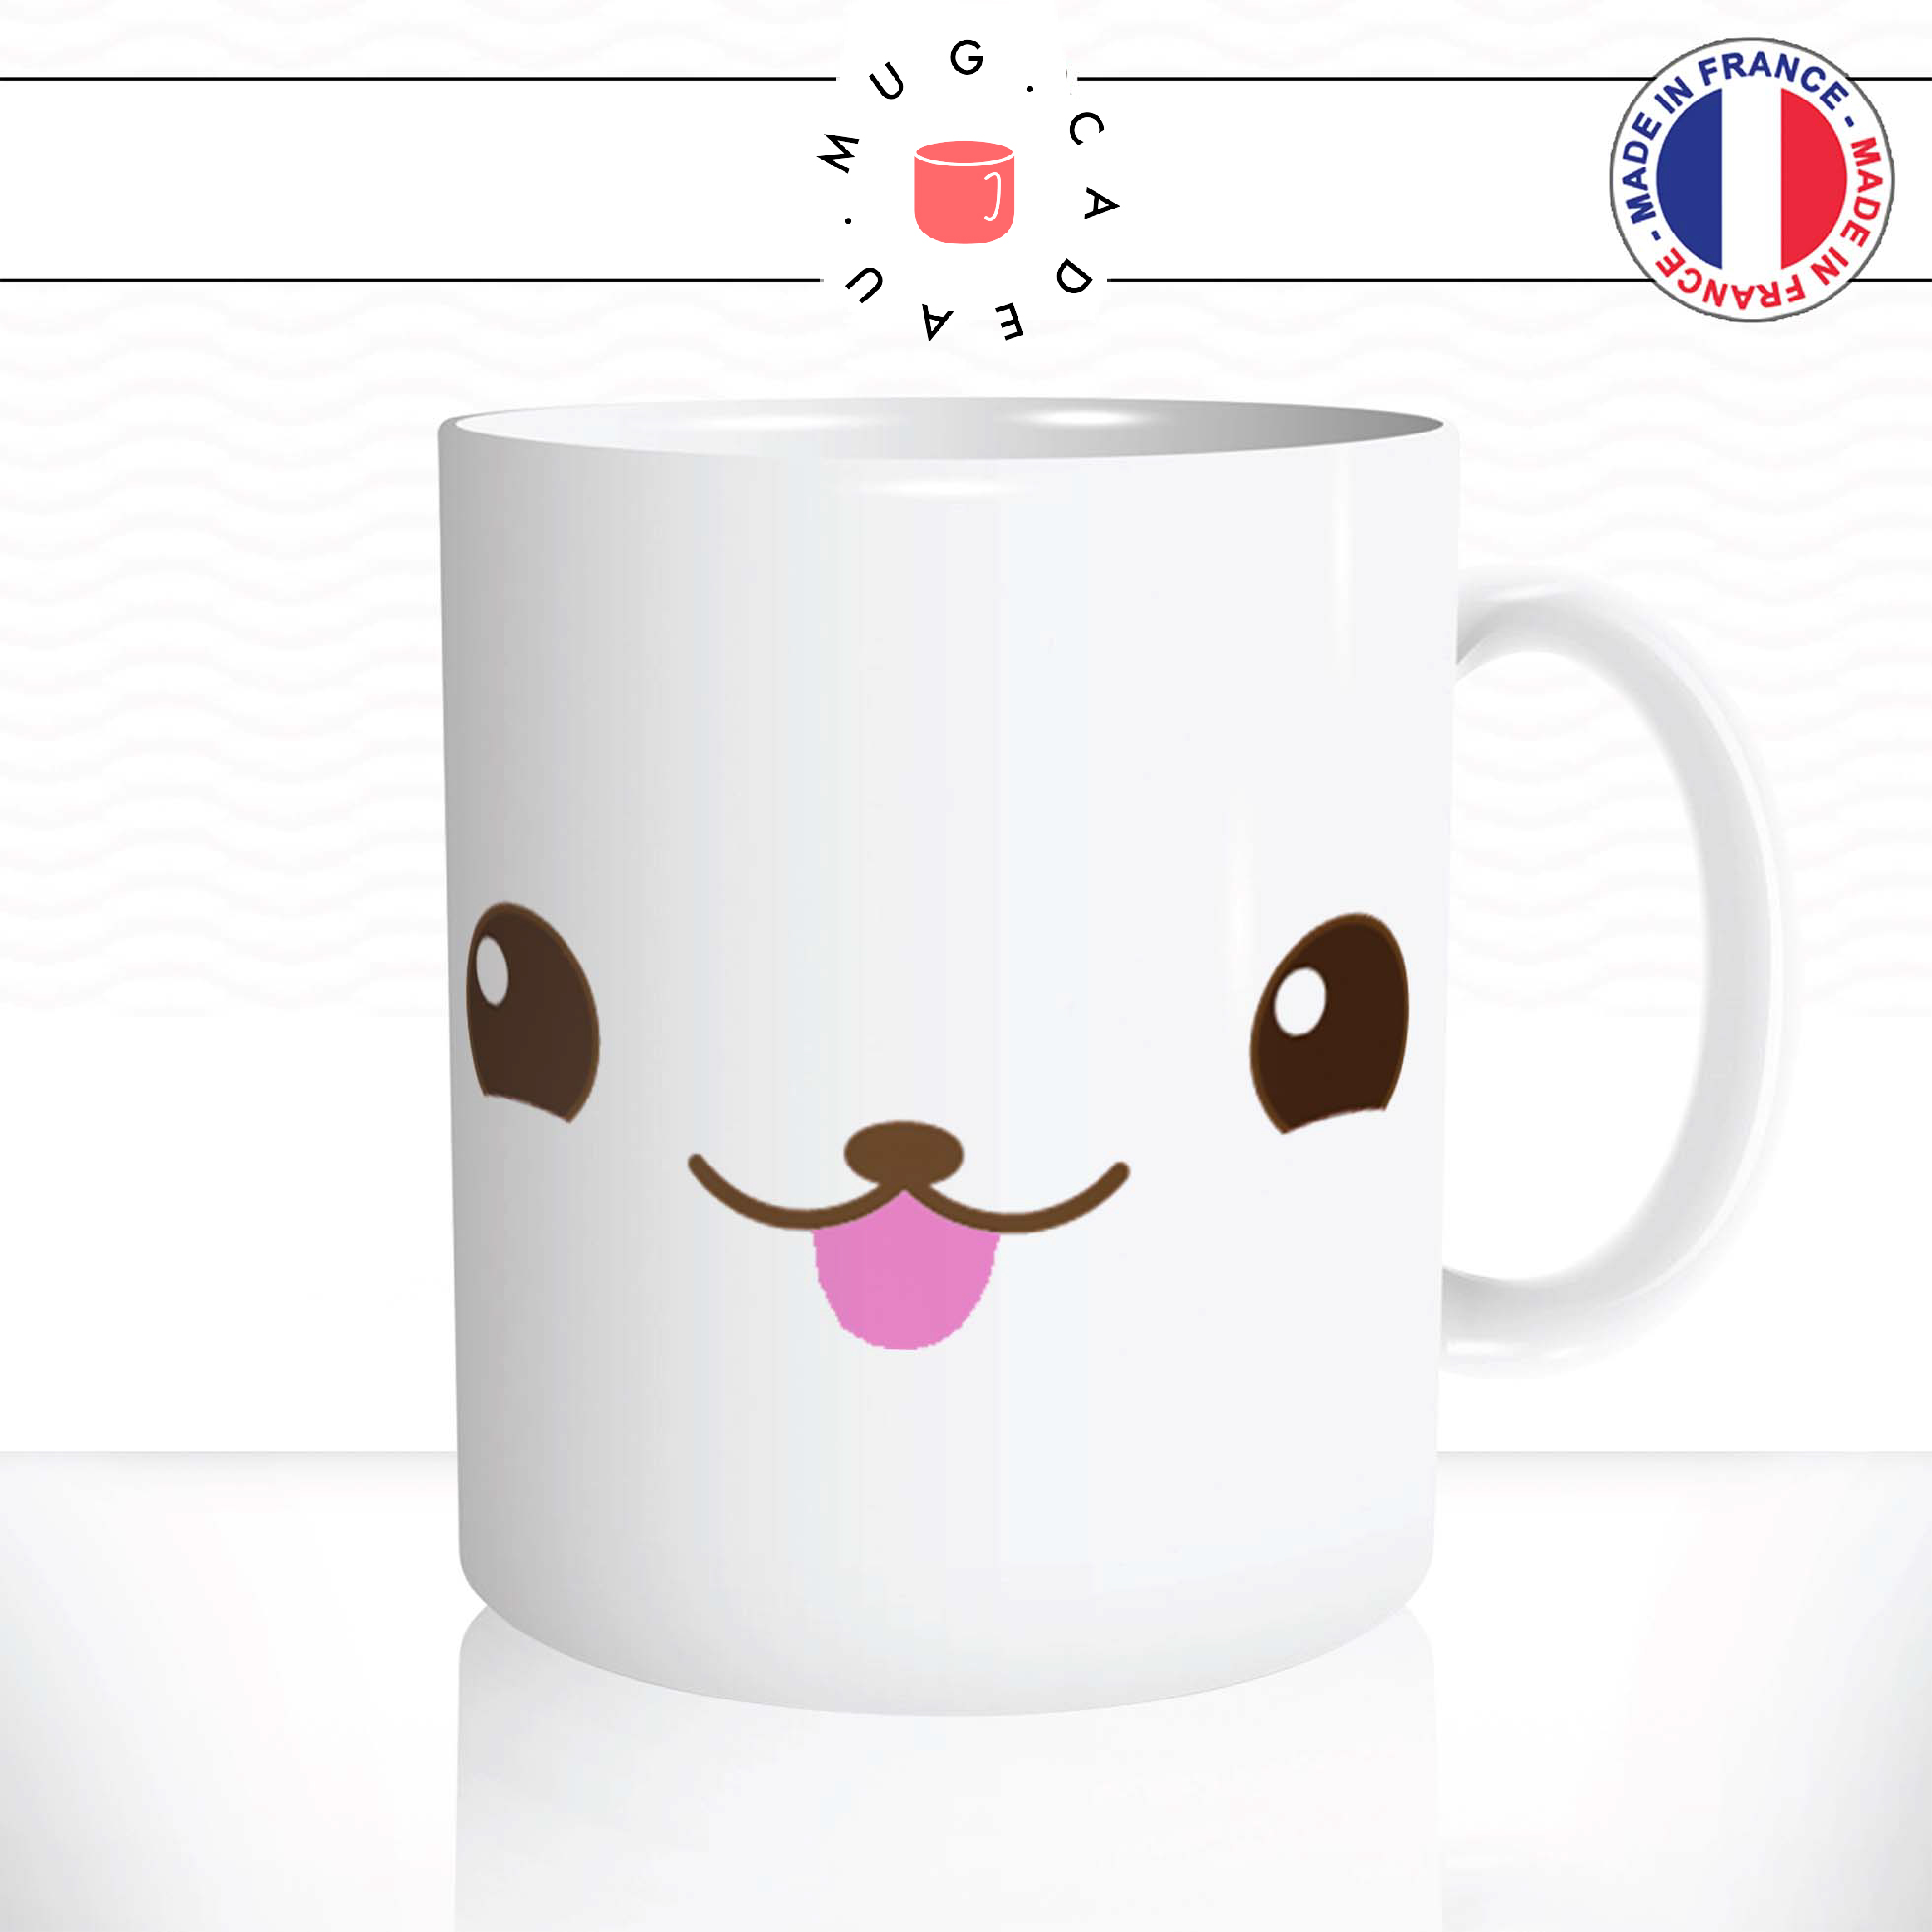 mug-tasse-ref3-yeux-langue-chat-visage-cute-cafe-the-mugs-tasses-personnalise-anse-droite